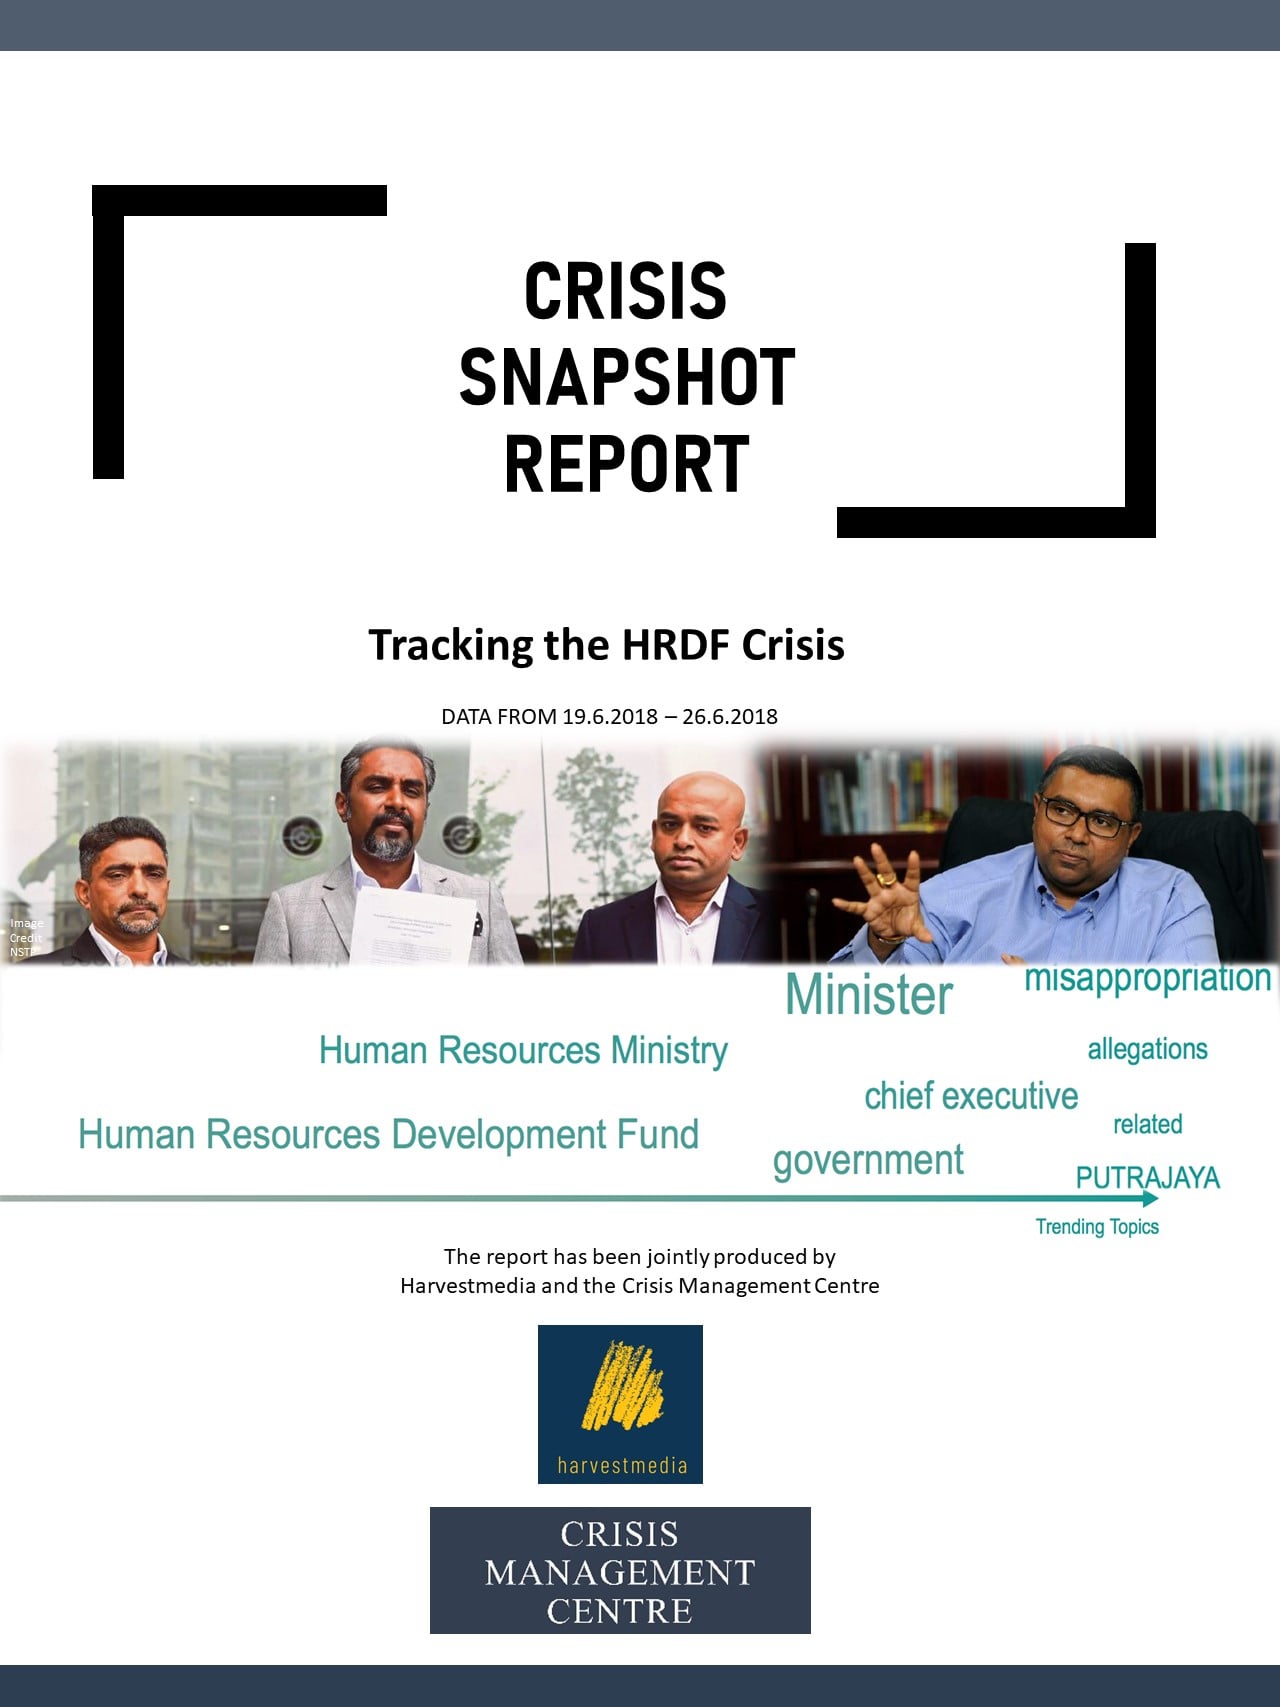 Crisis Snapshot Report “Tracking the HRDF Crisis”